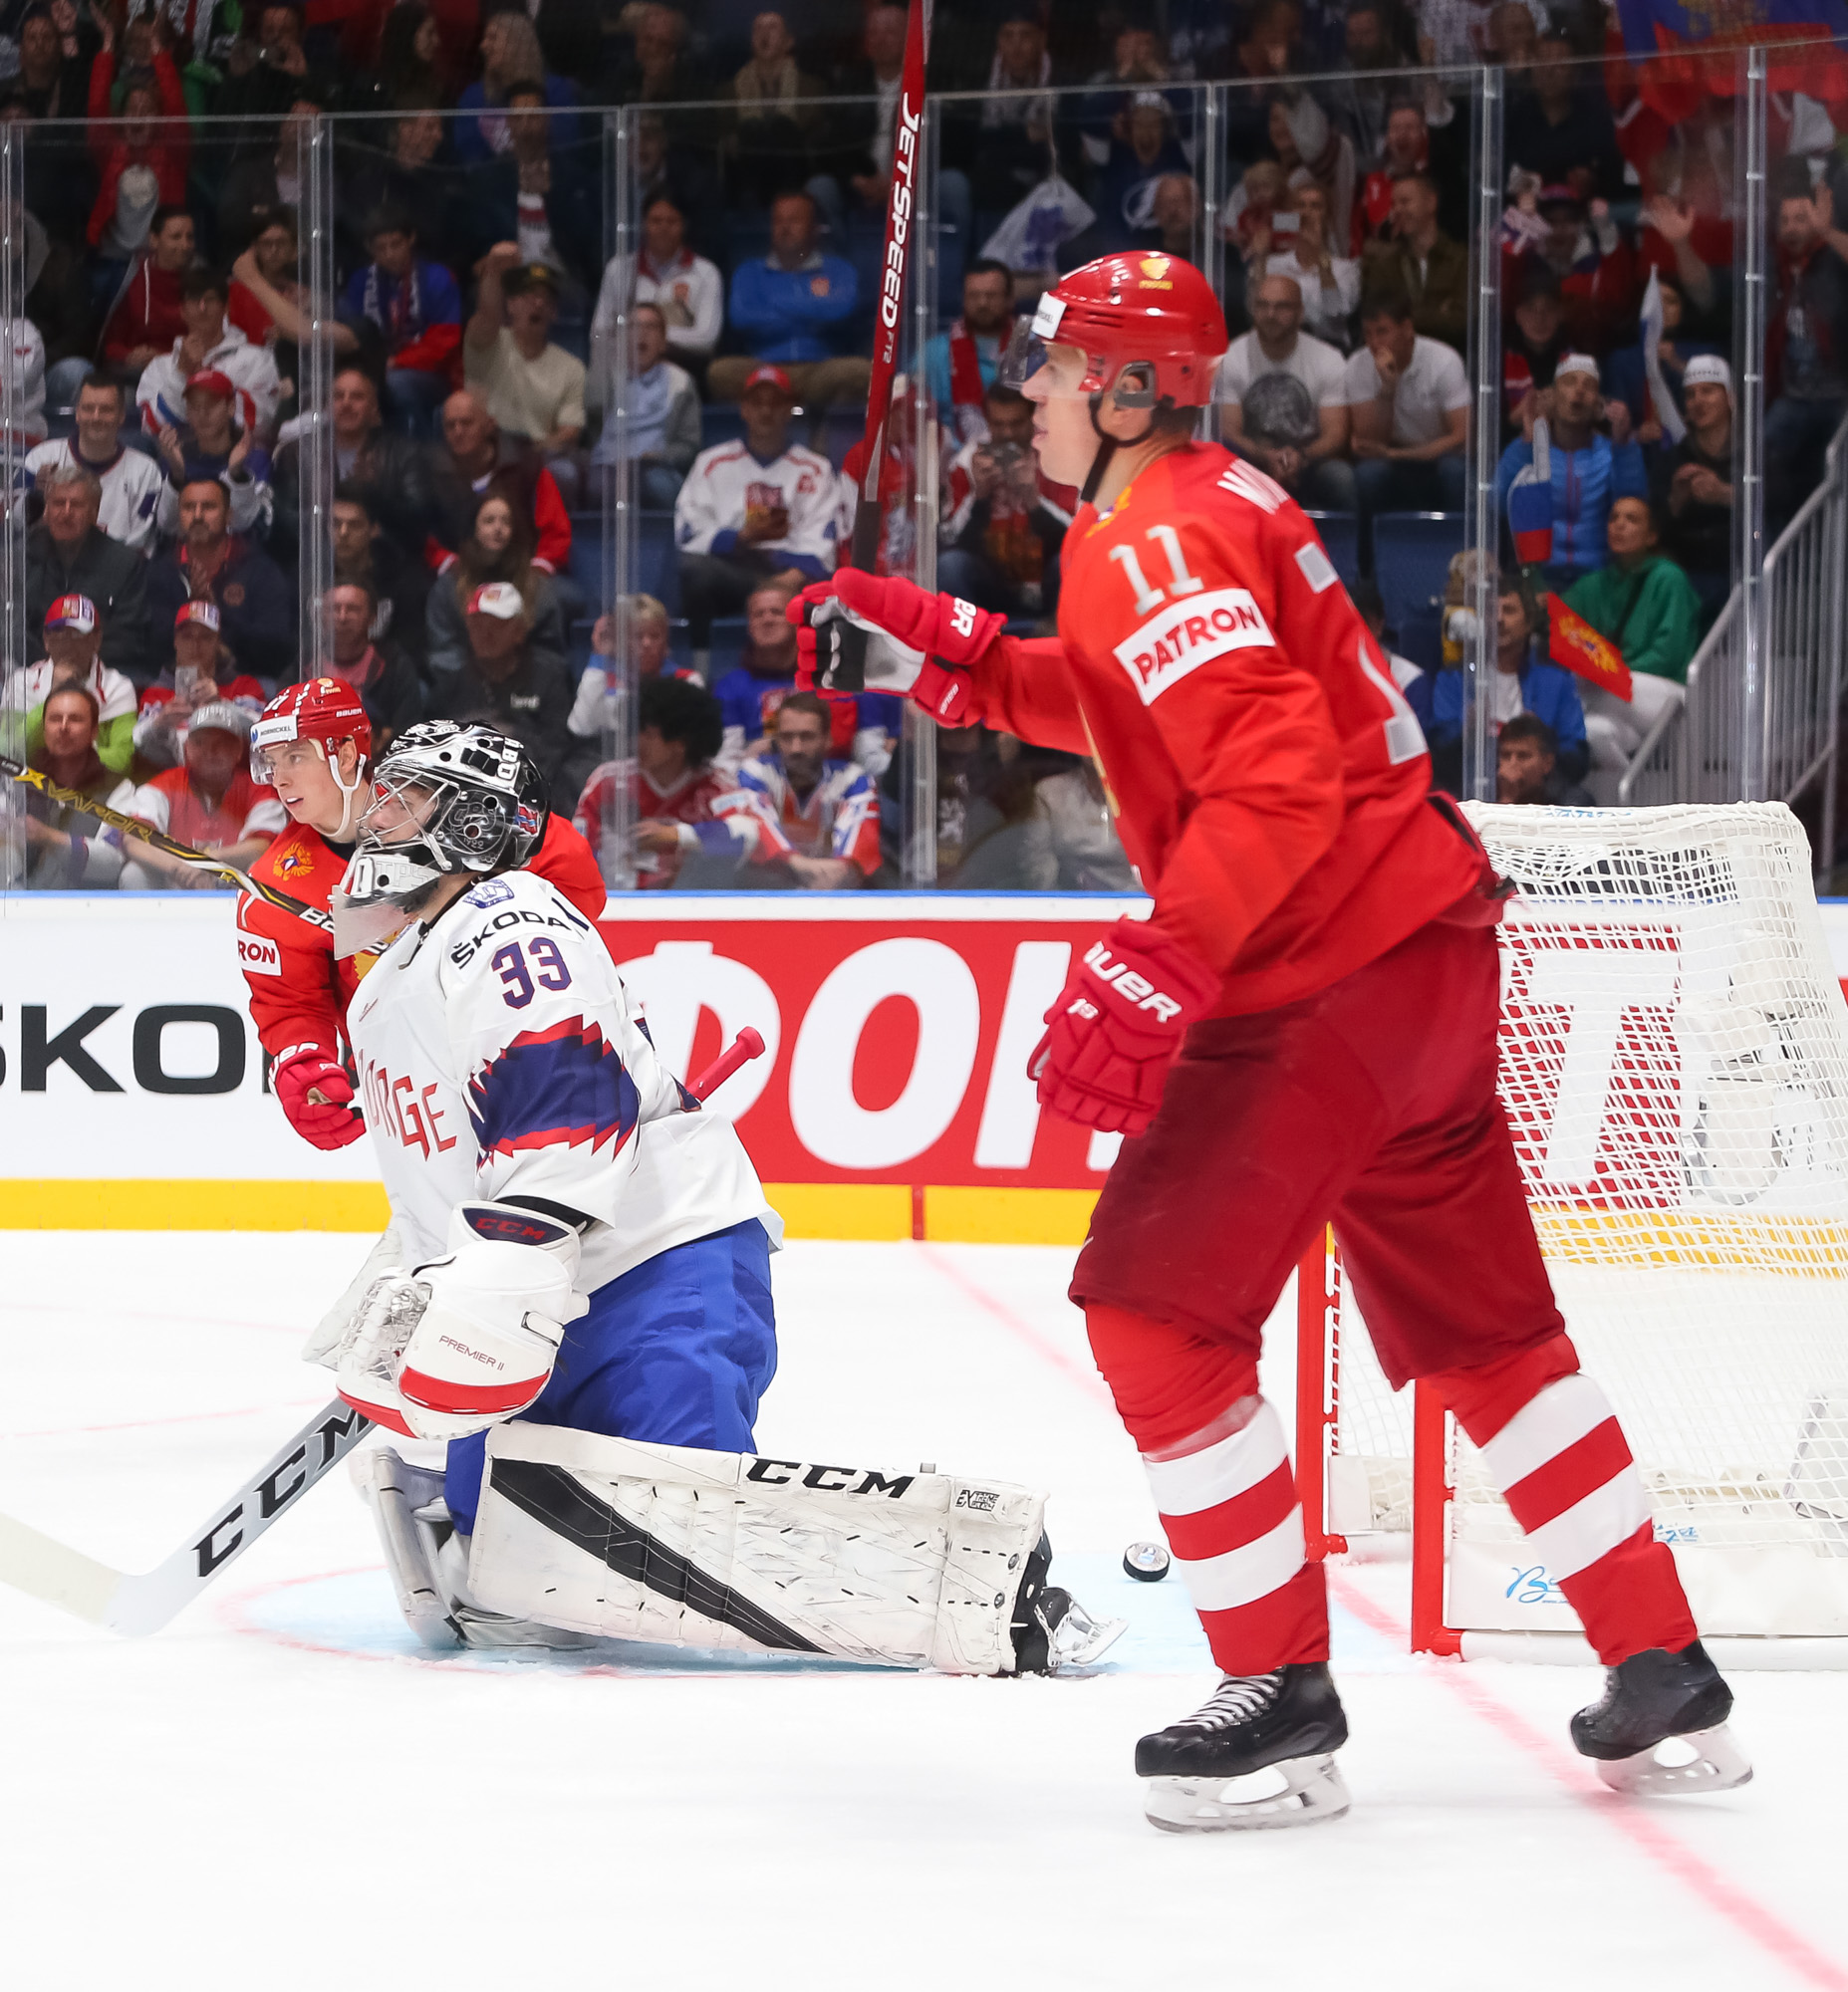 IIHF - Gallery: Russia vs. Norway - 2019 IIHF Ice Hockey World Championship